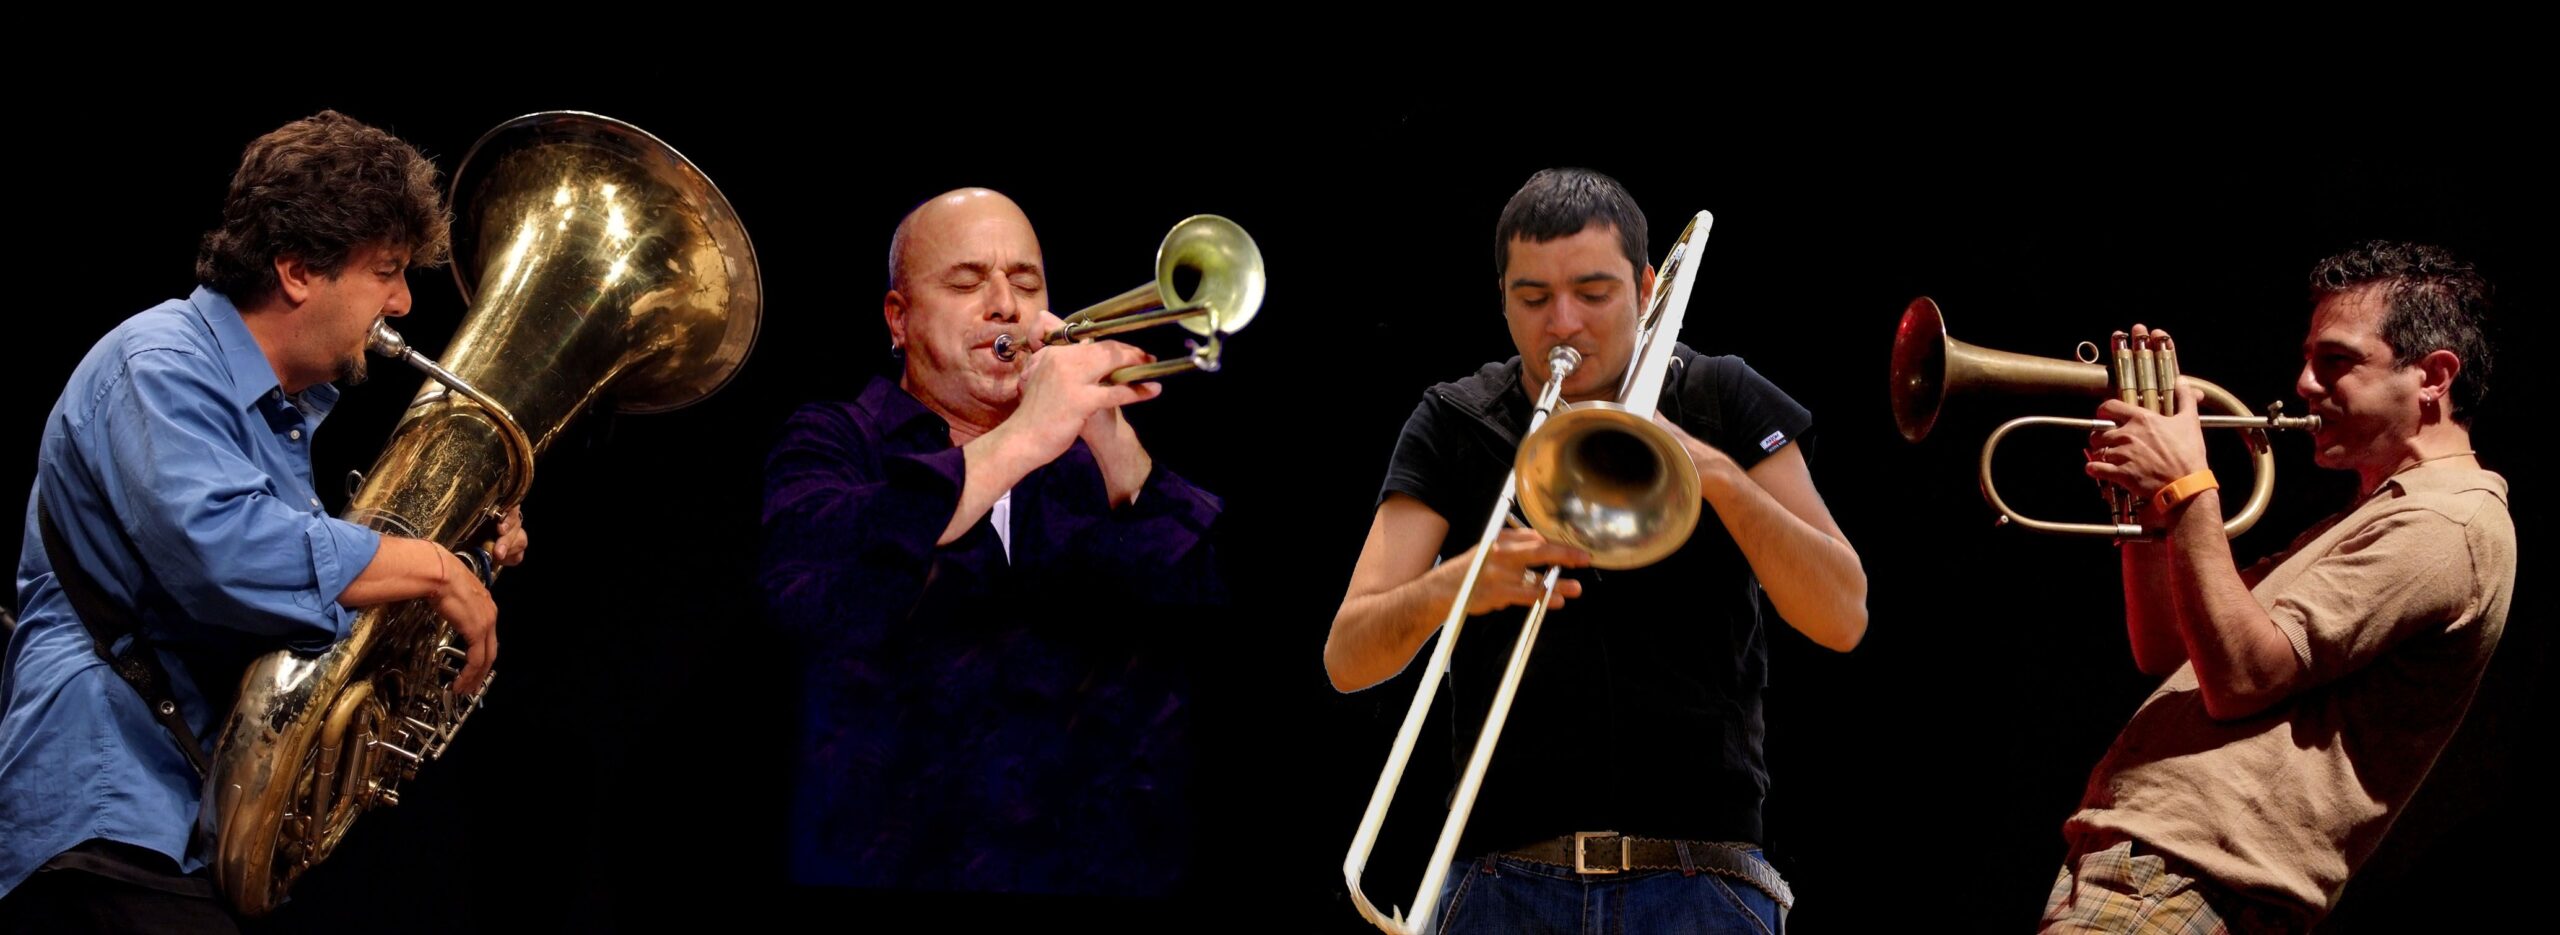 Umbria Jazz 2015: Perugia ospita la musica internazionale